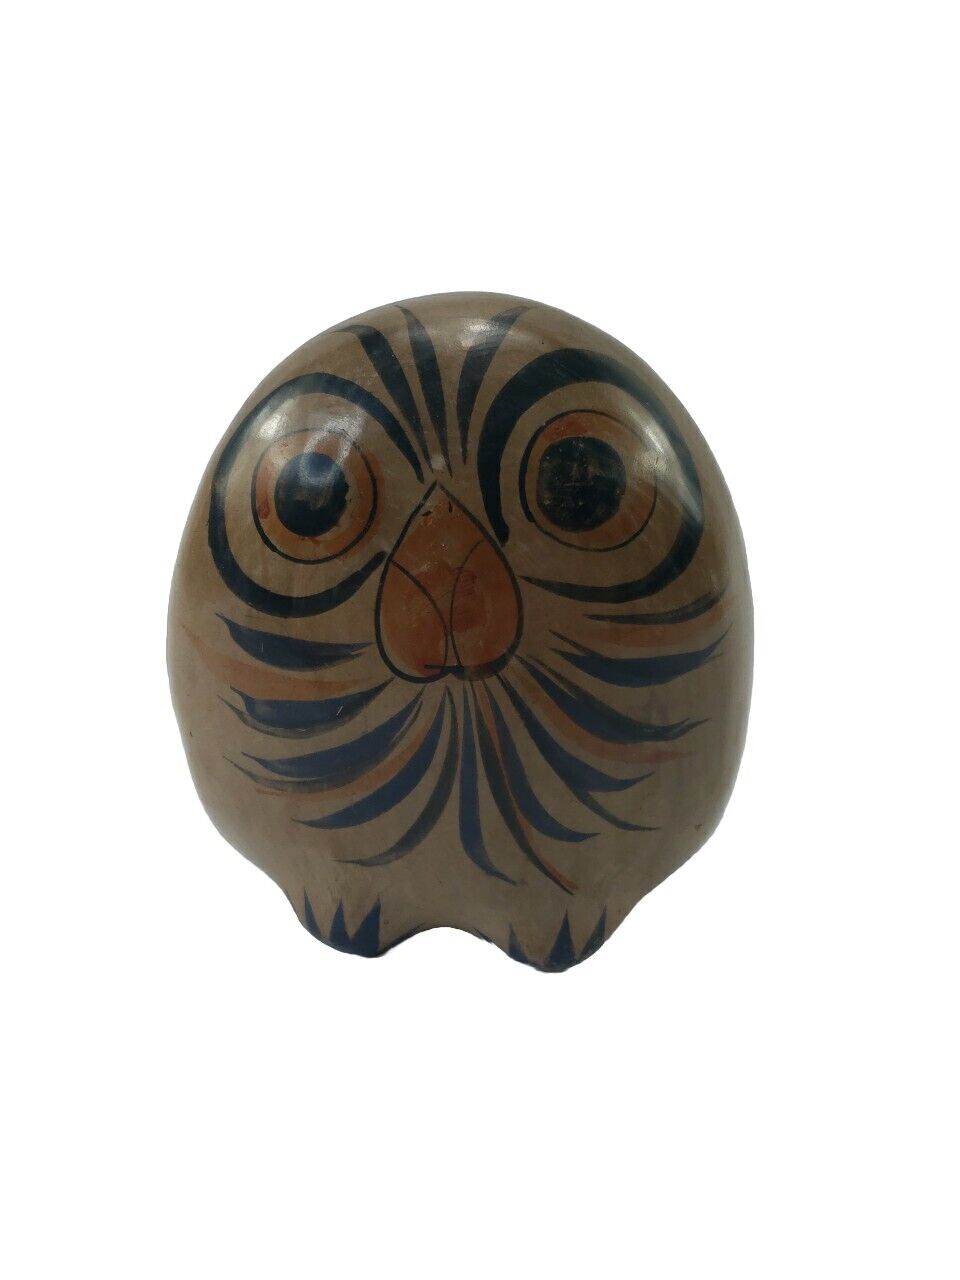 Vintage Mexican Pottery Owl Folk Art Hand-Painted Figurine Ceramic